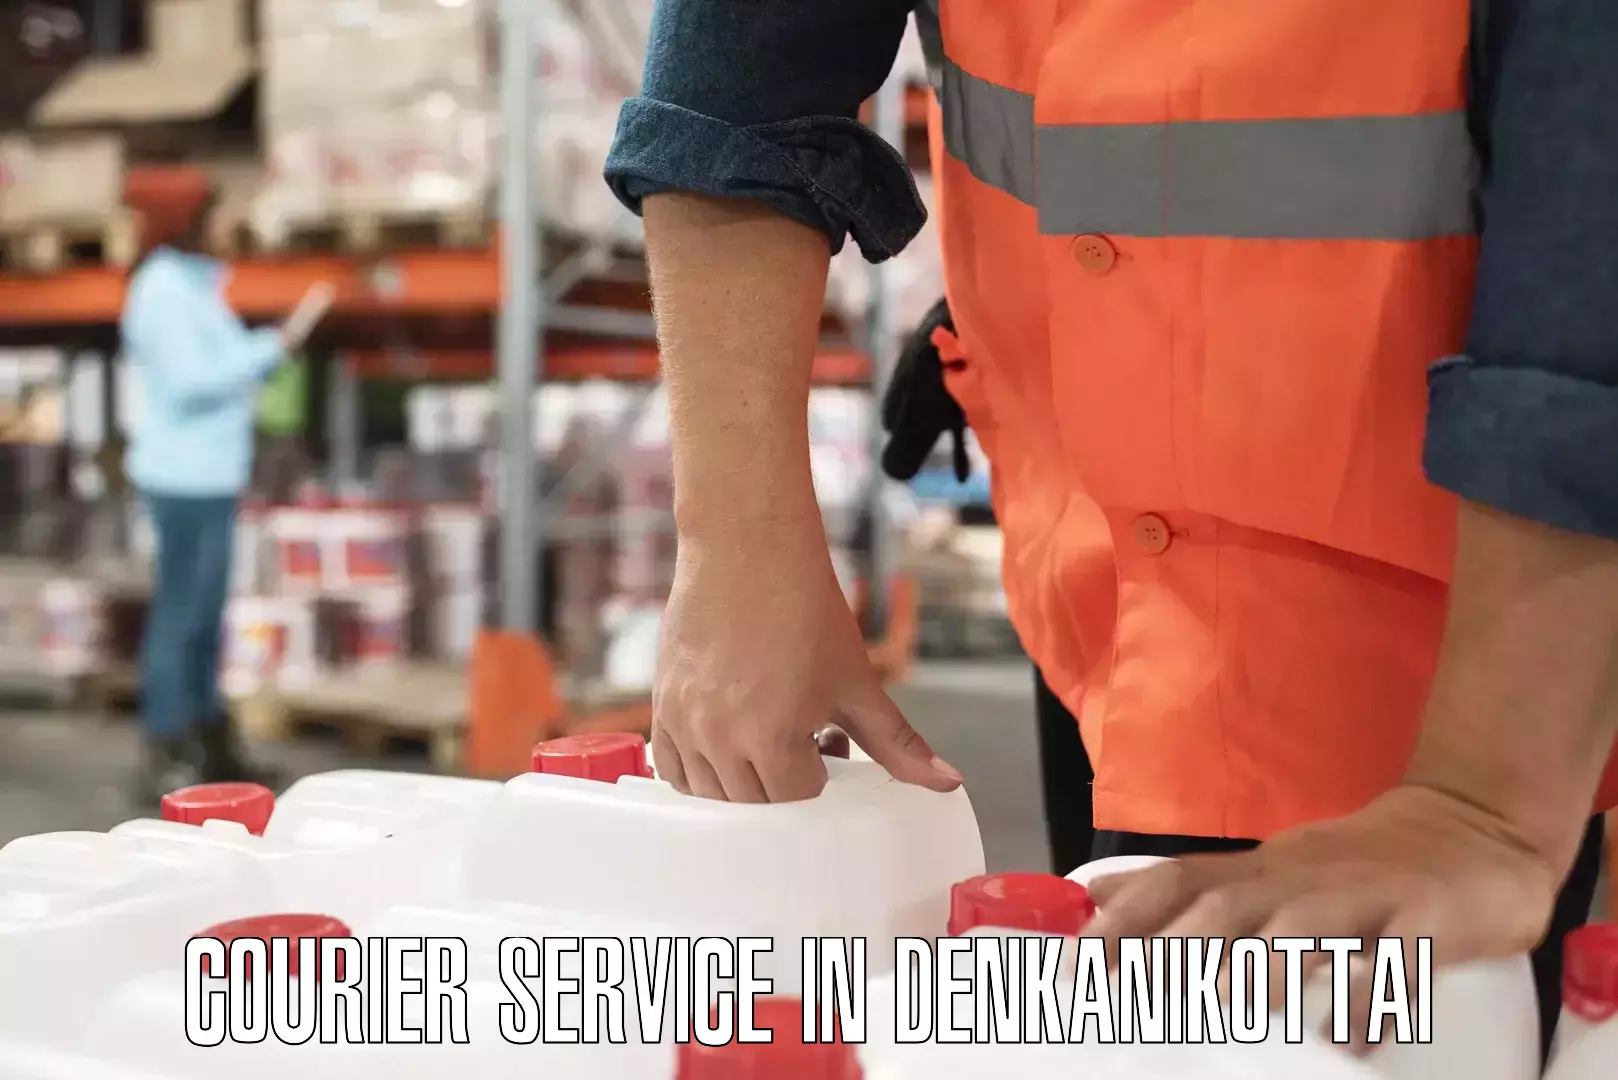 Seamless shipping experience in Denkanikottai